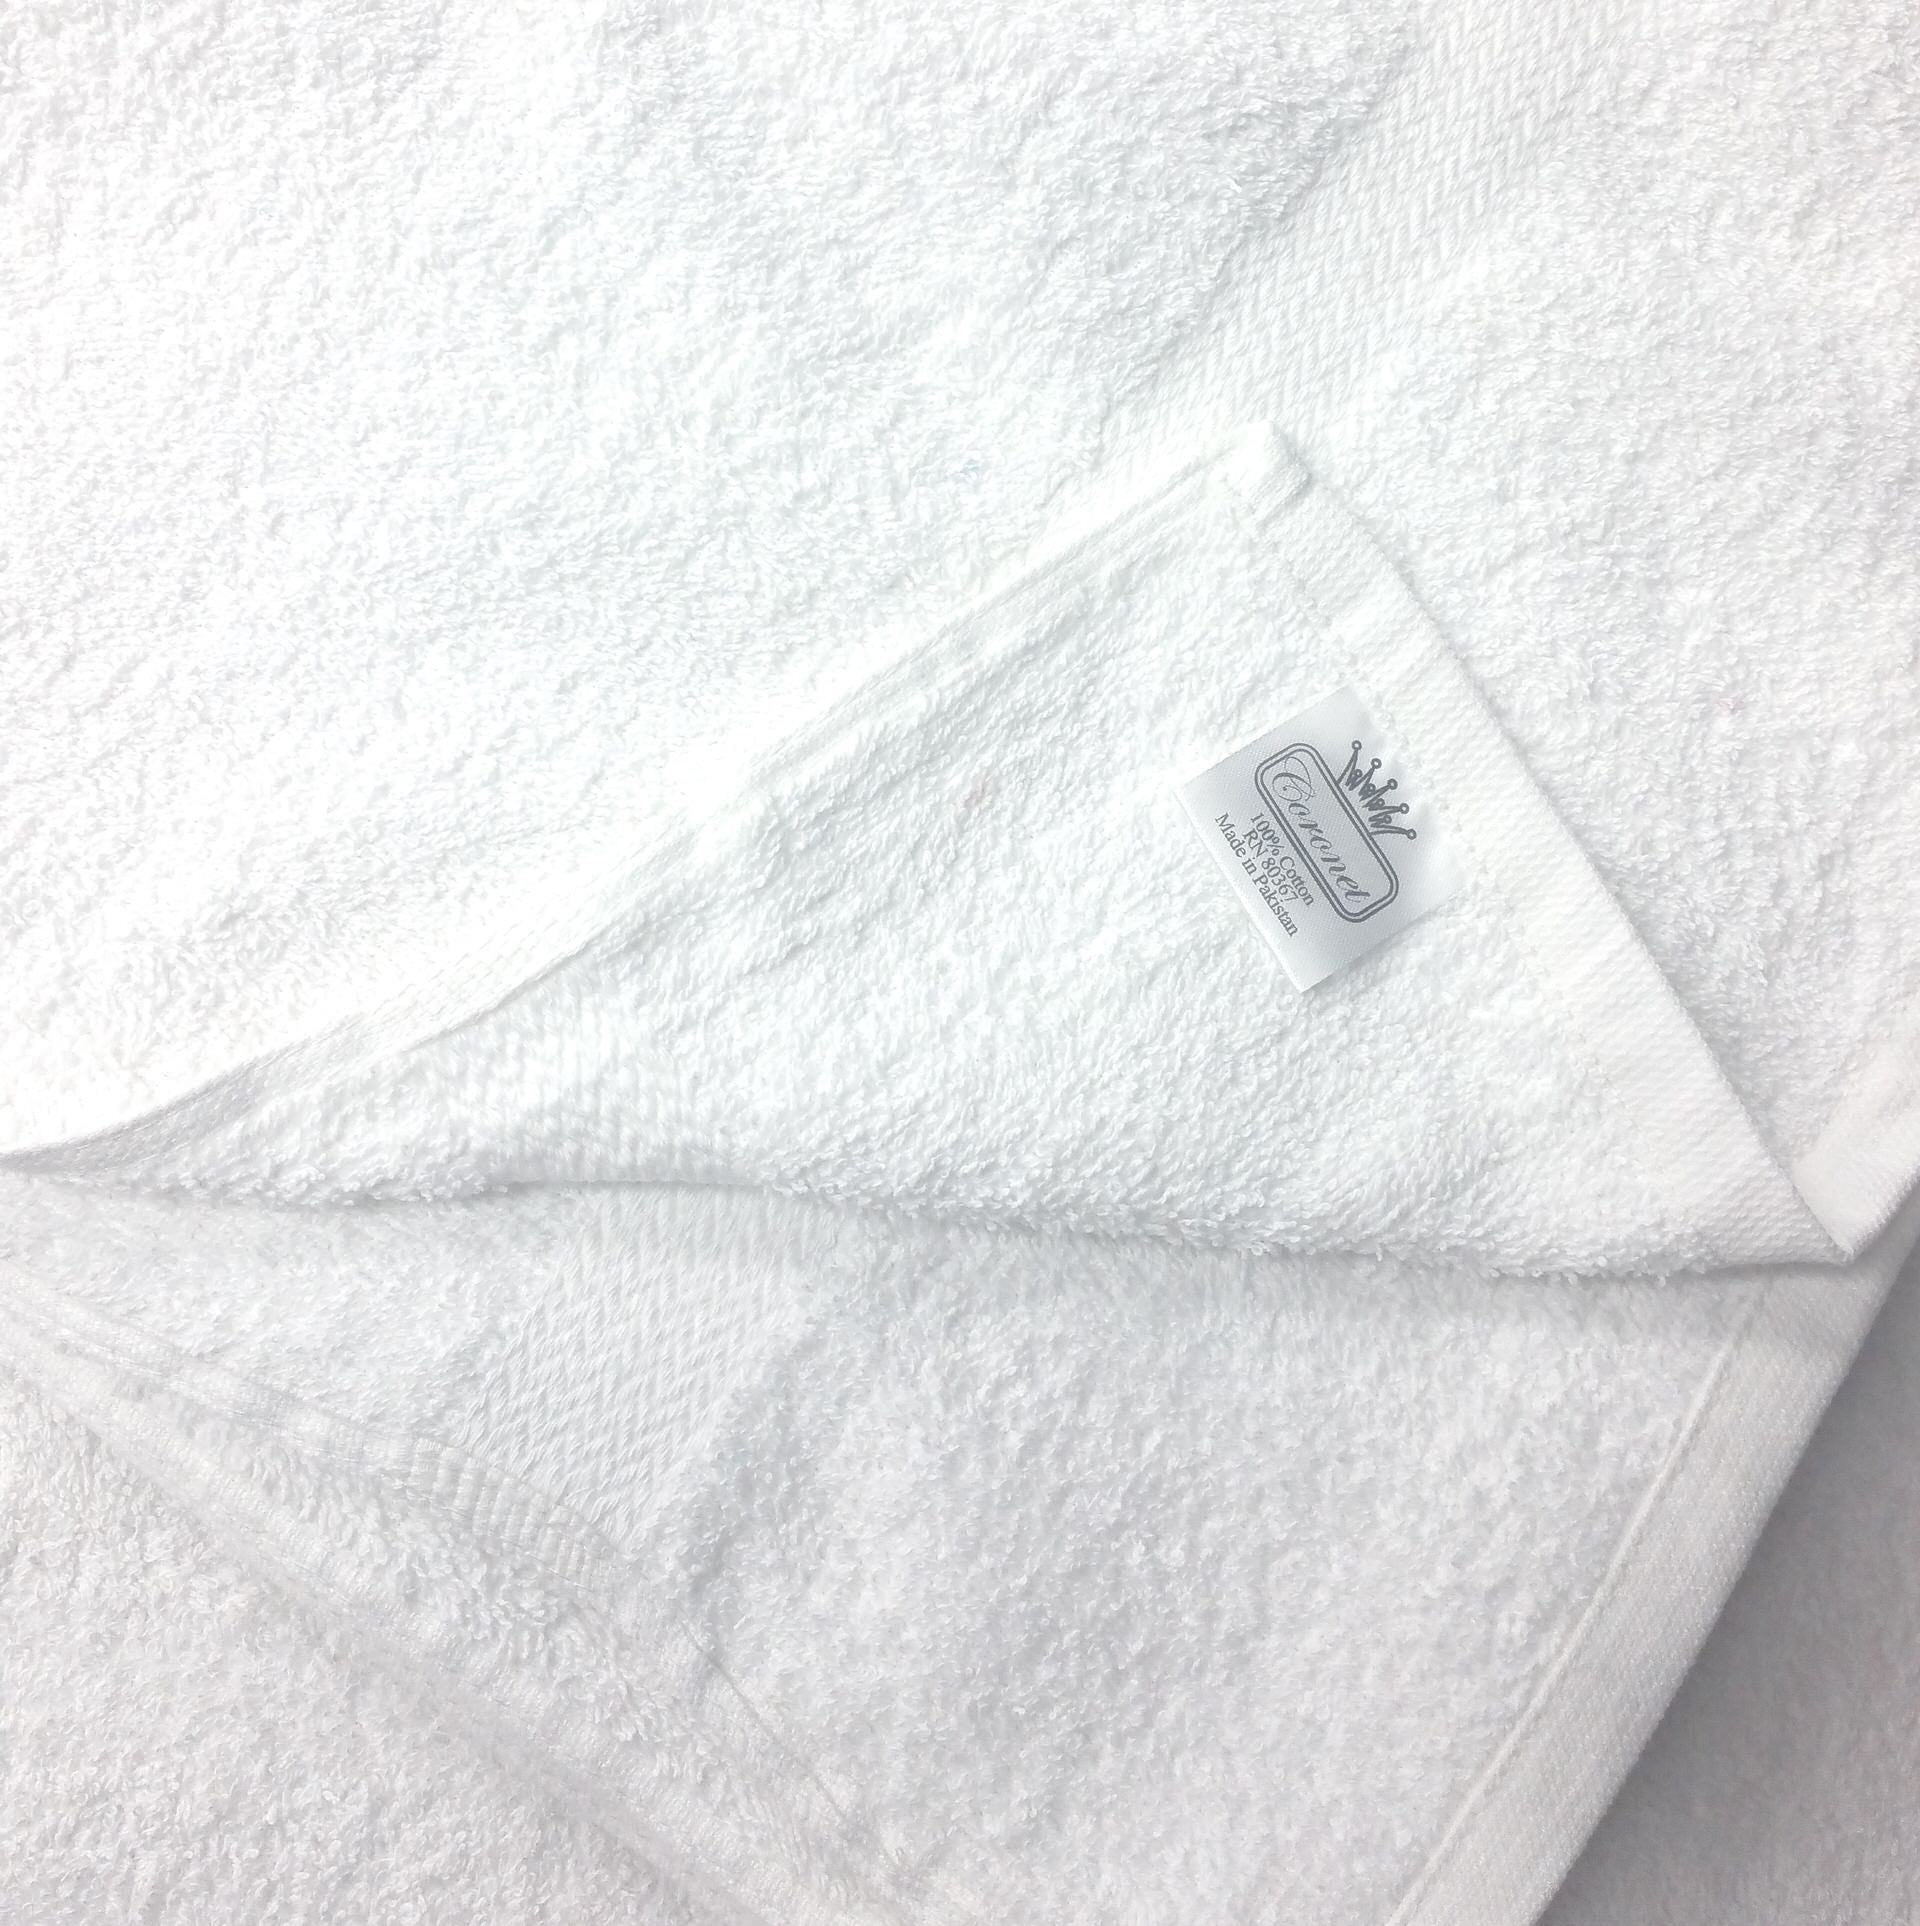 Coronet Towels – USATowl